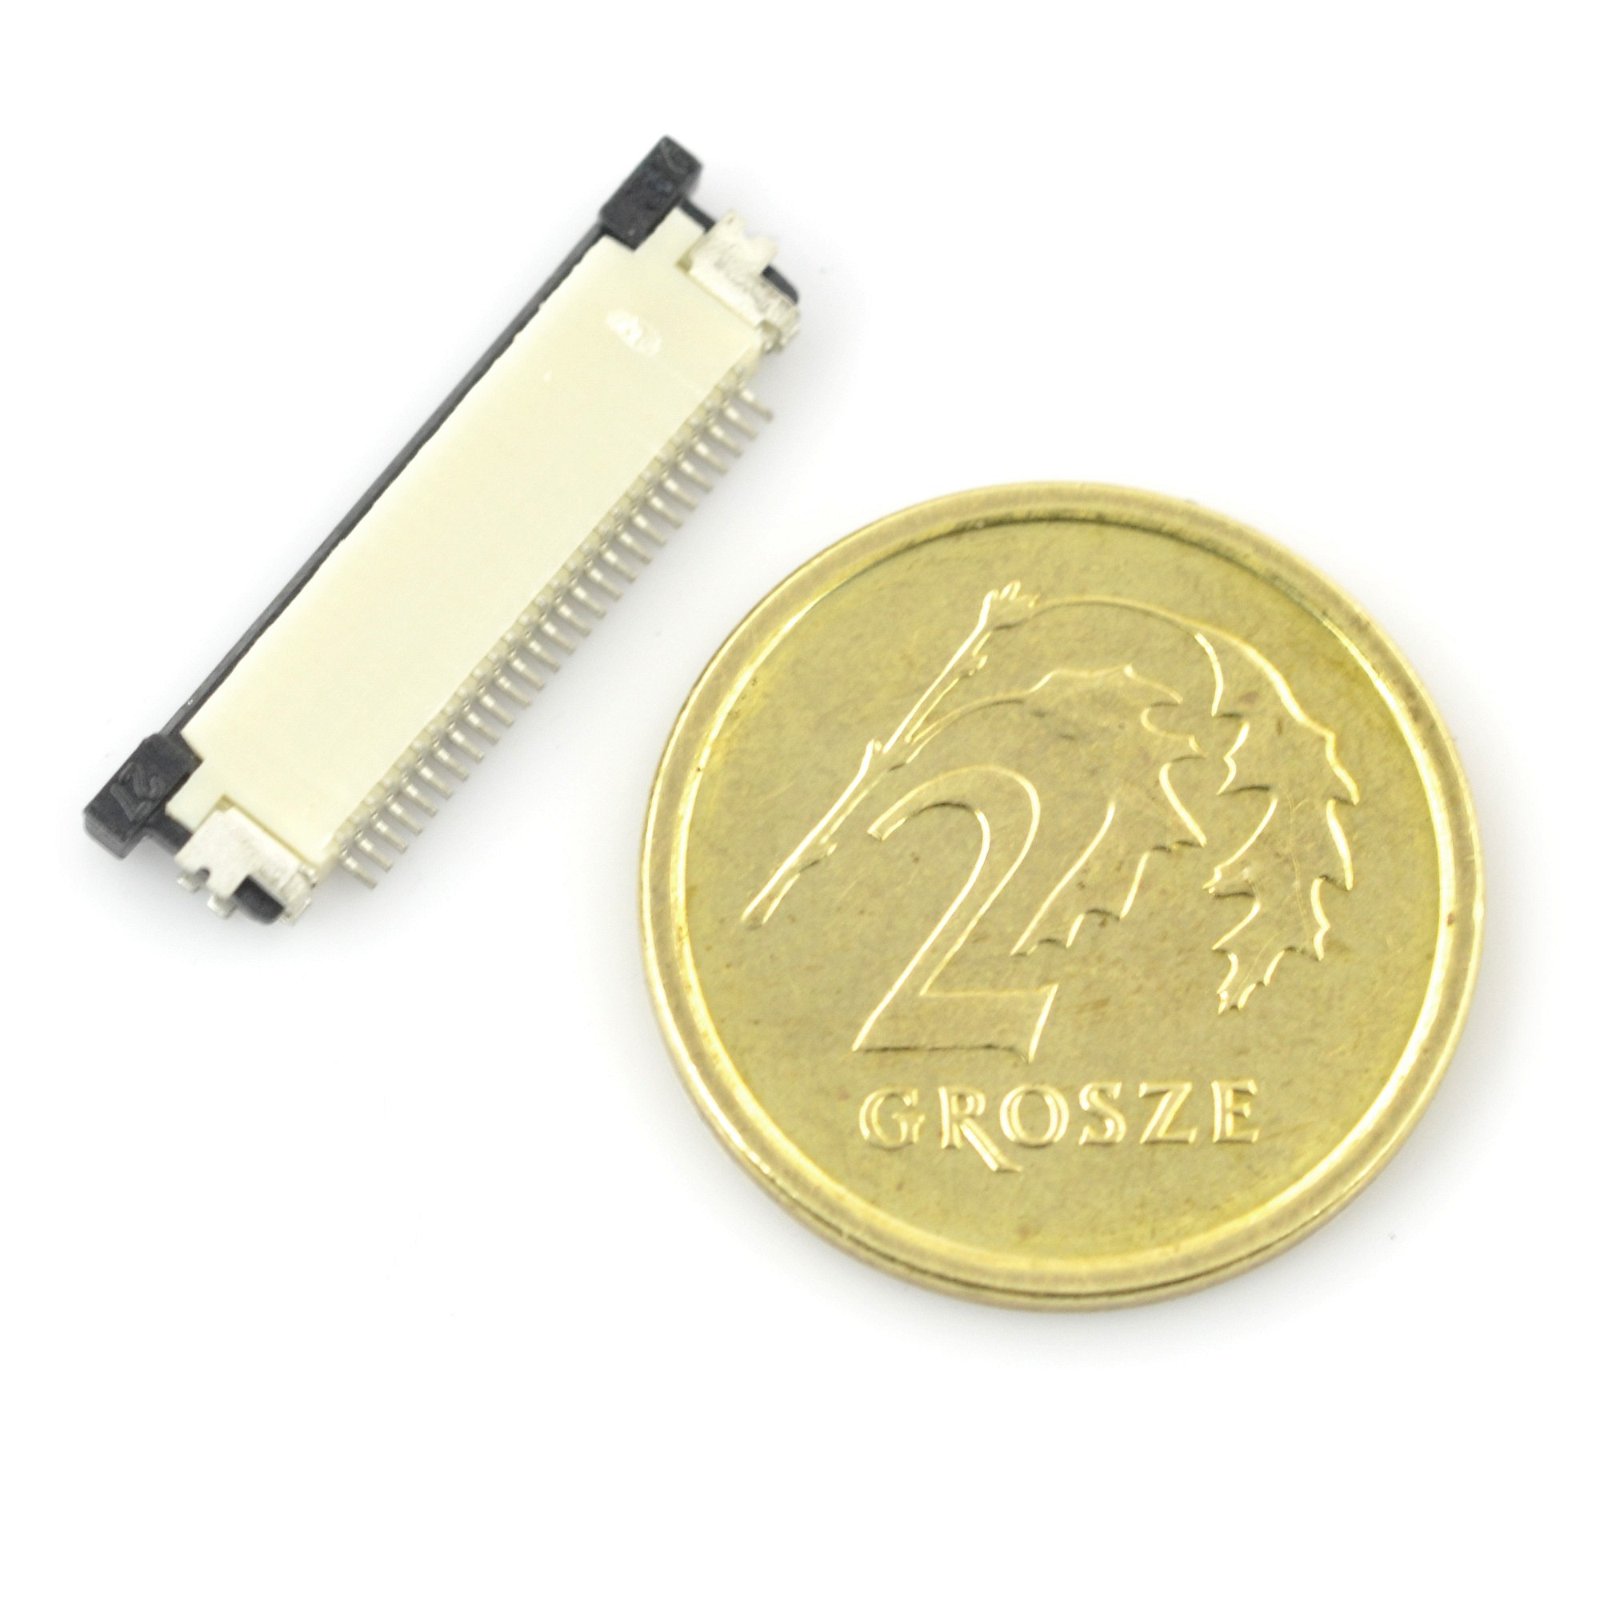 ZIF-Buchse, FFC / FPC, 28-polig horizontal, Raster 0,5 mm, Kontakt oben